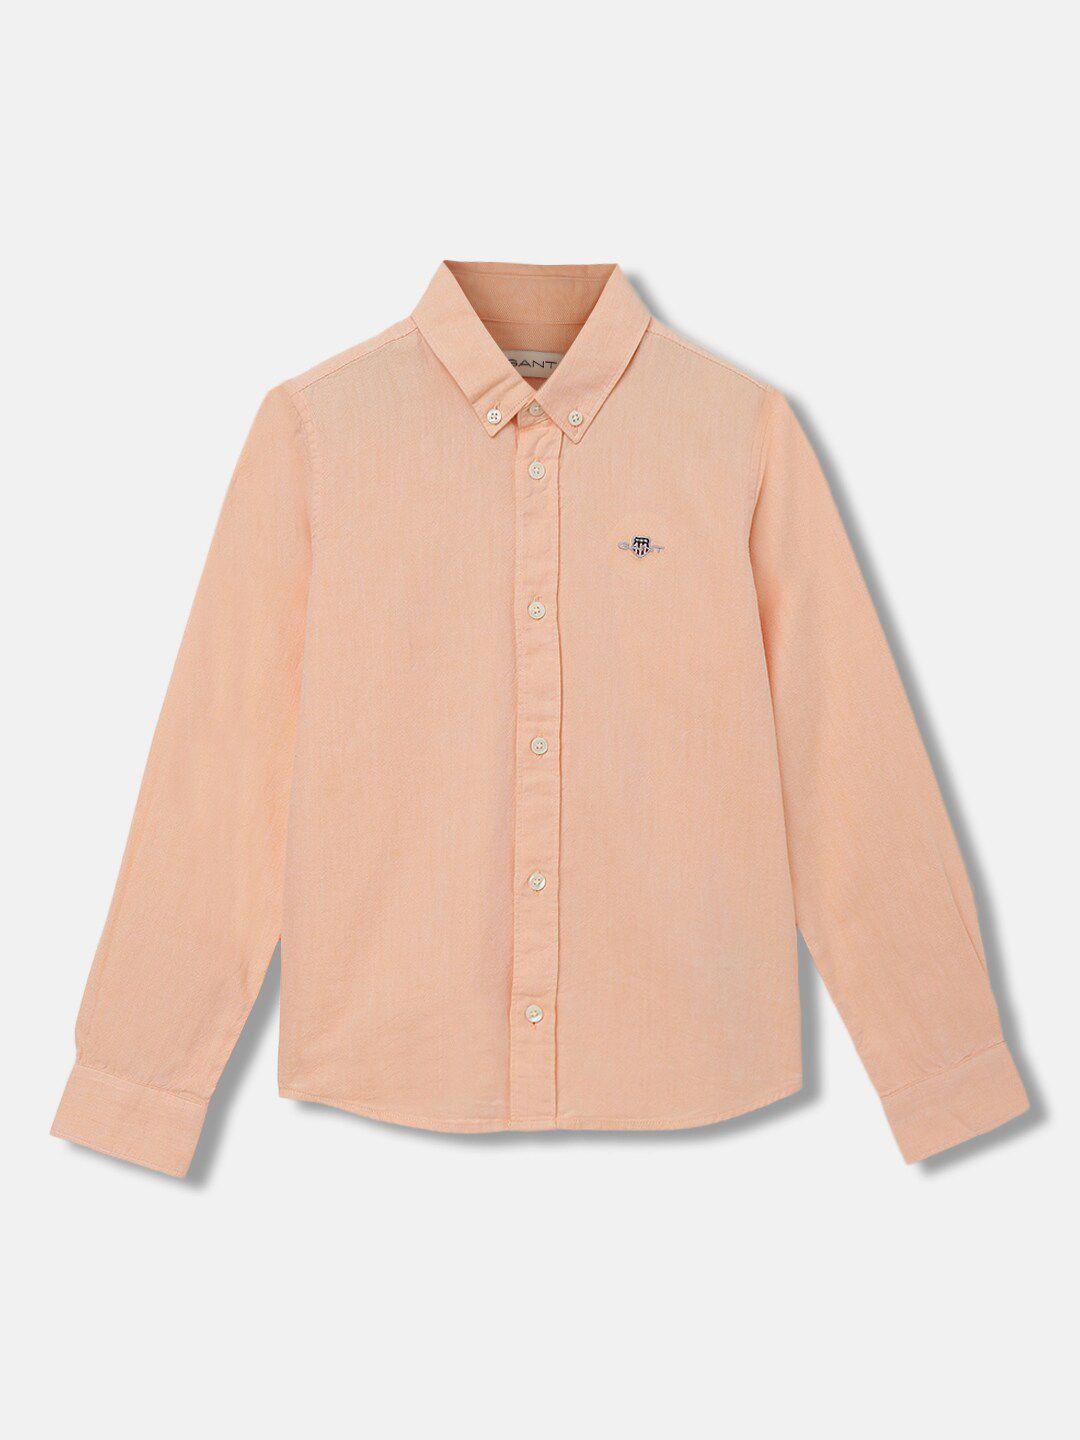 gant-boys-button-down-collar-long-sleeves-casual-shirt